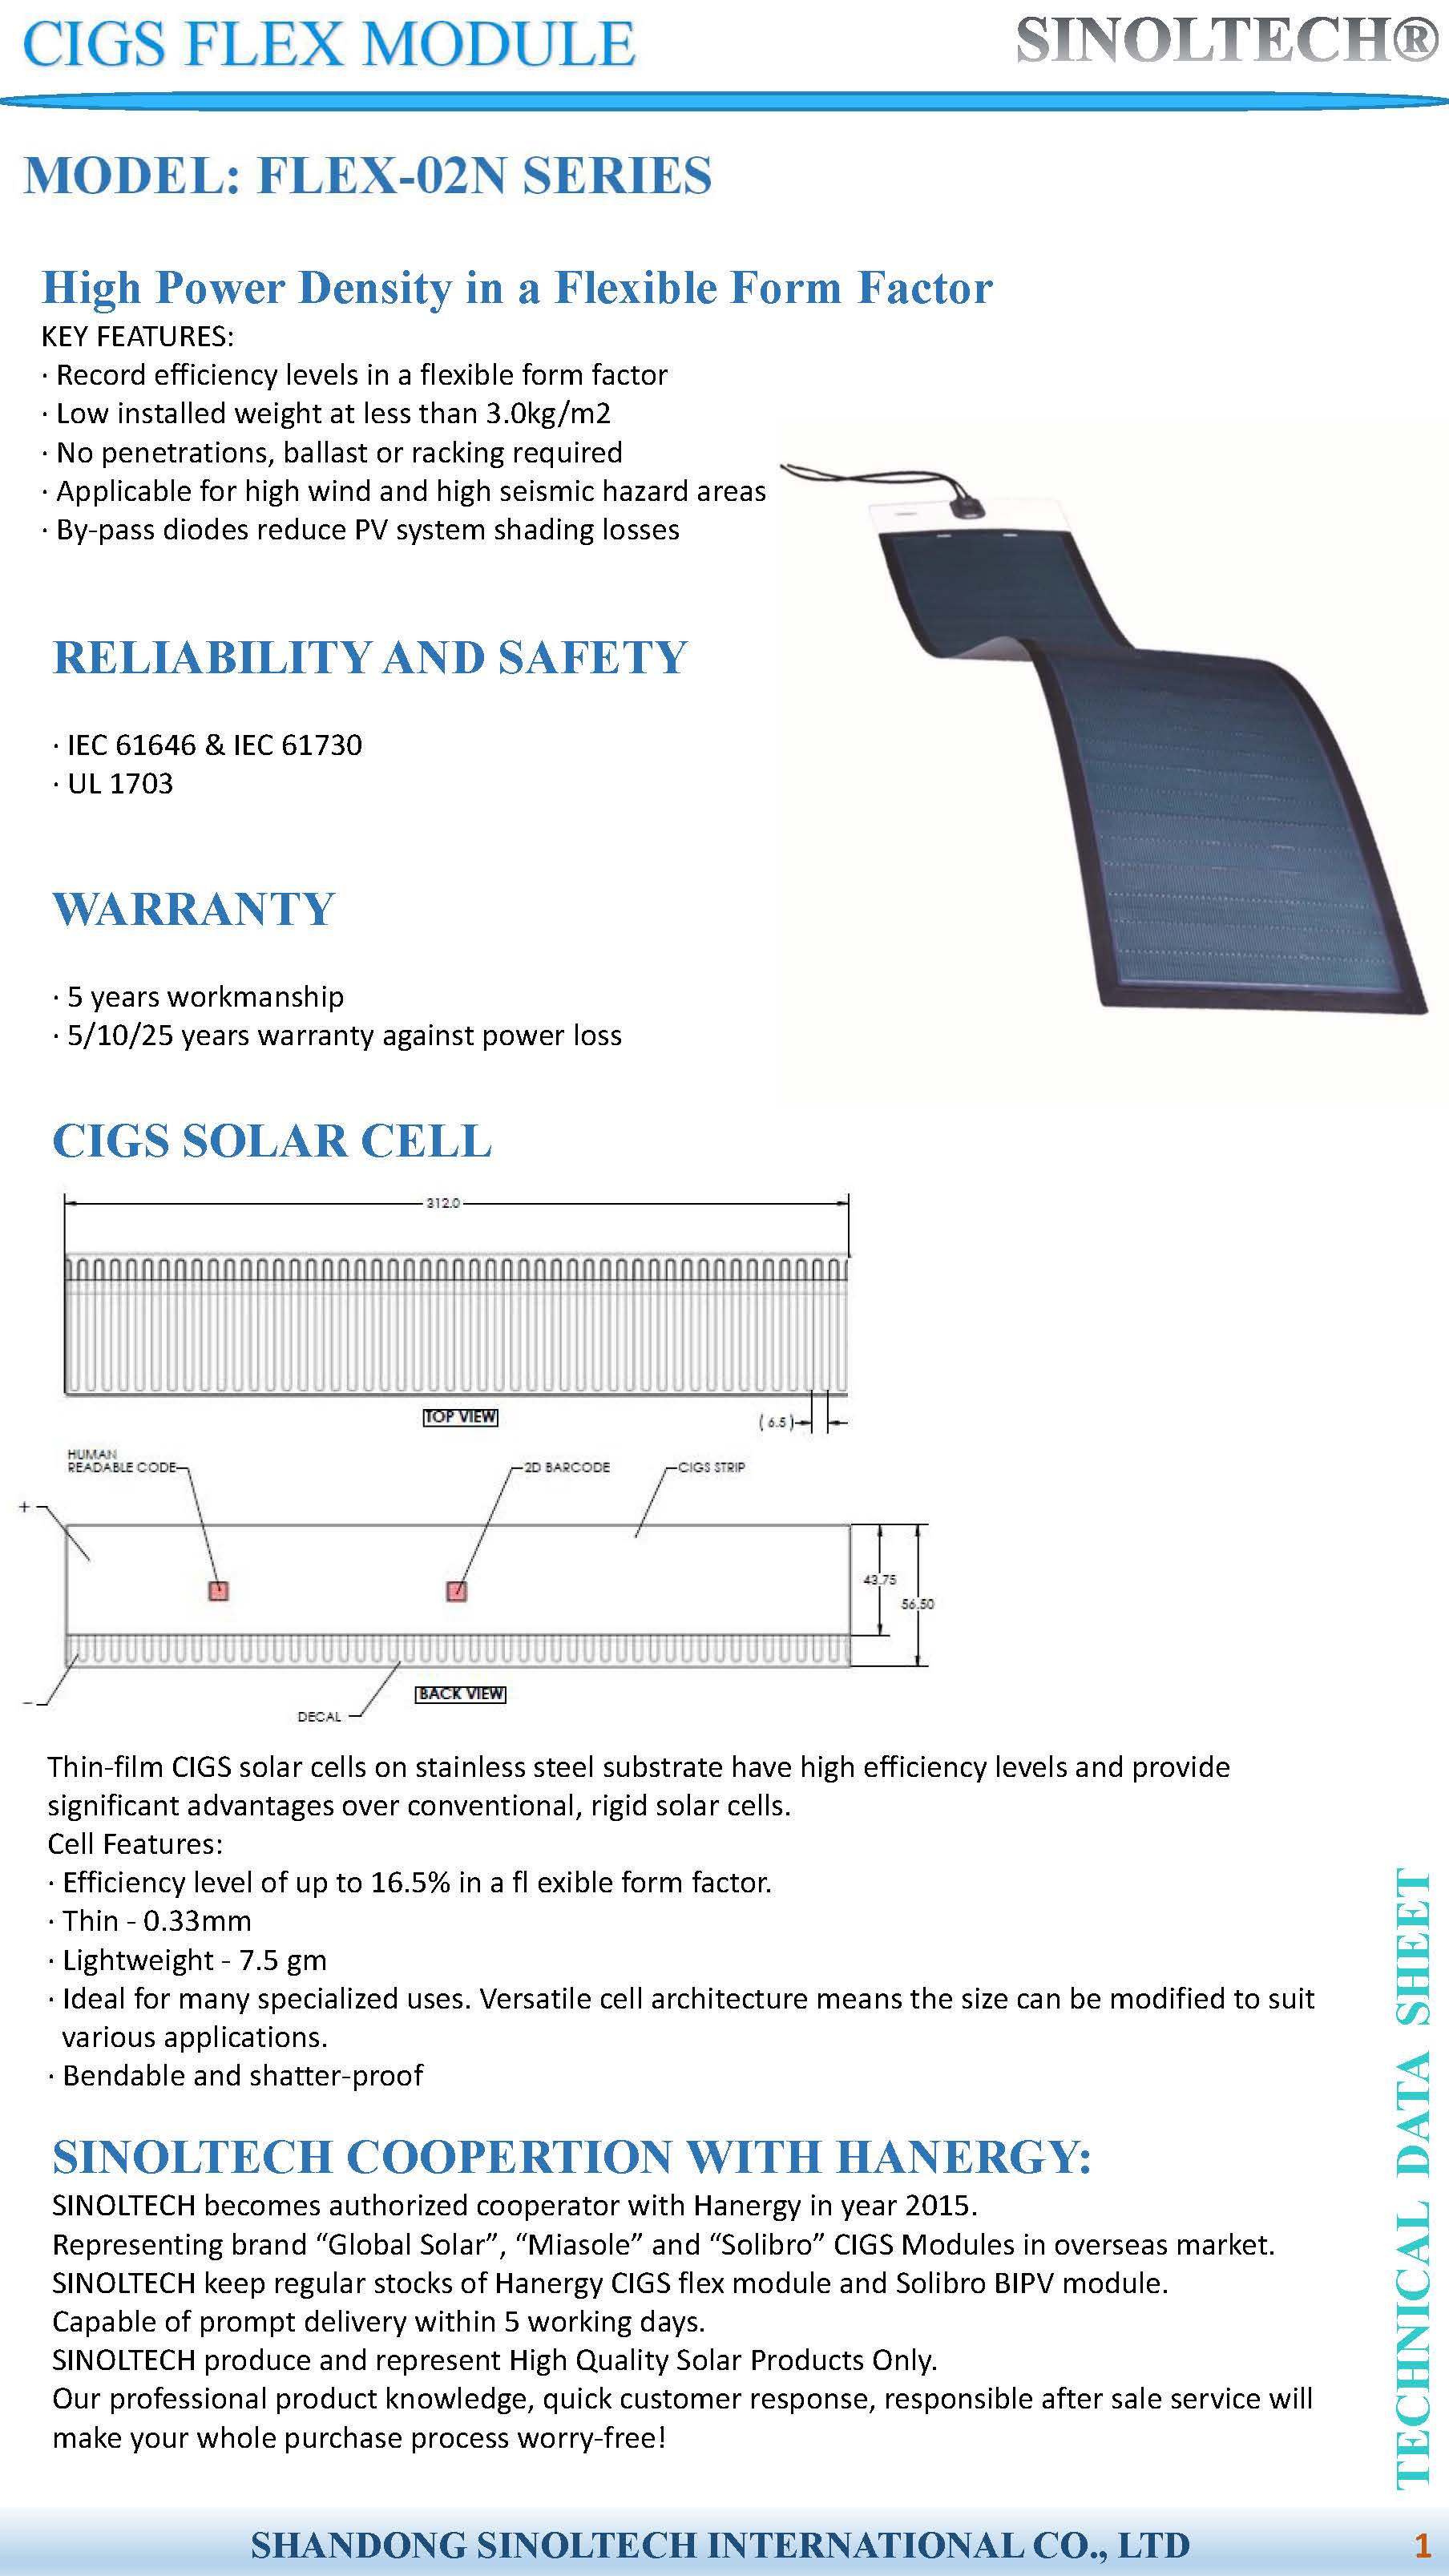 miasole flexible solar module